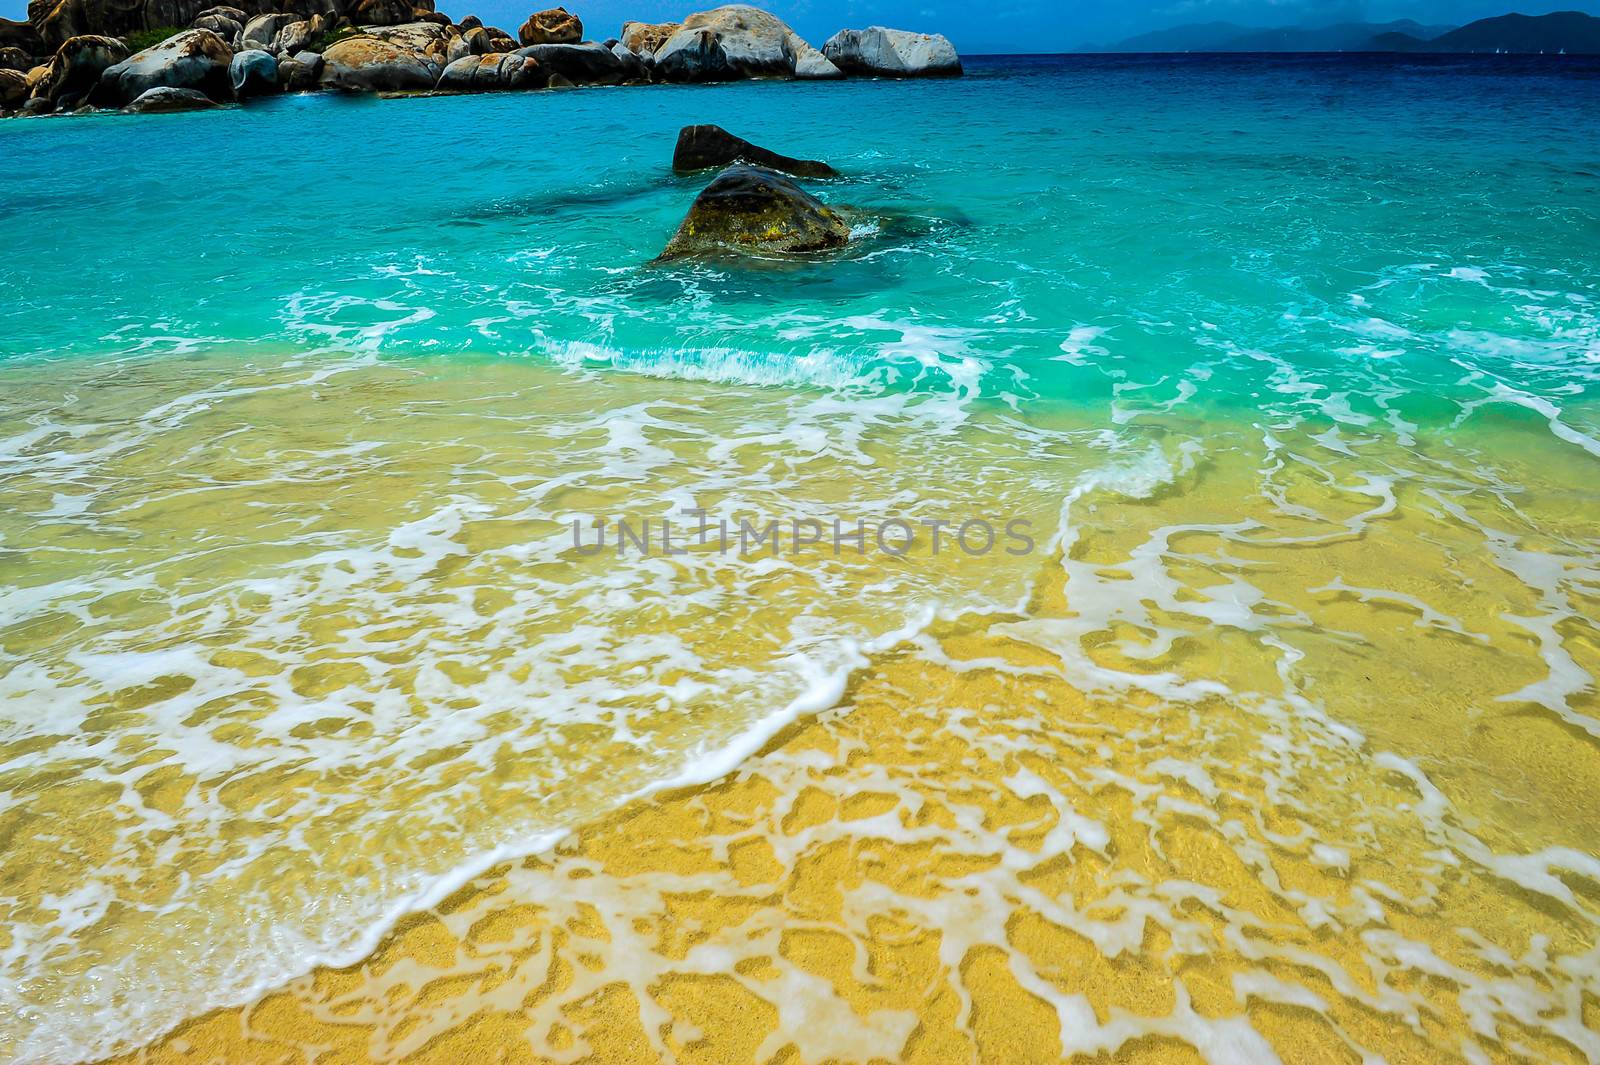 Wonderful colors of the beaches of Virgin Gorda, British Virgin Islands